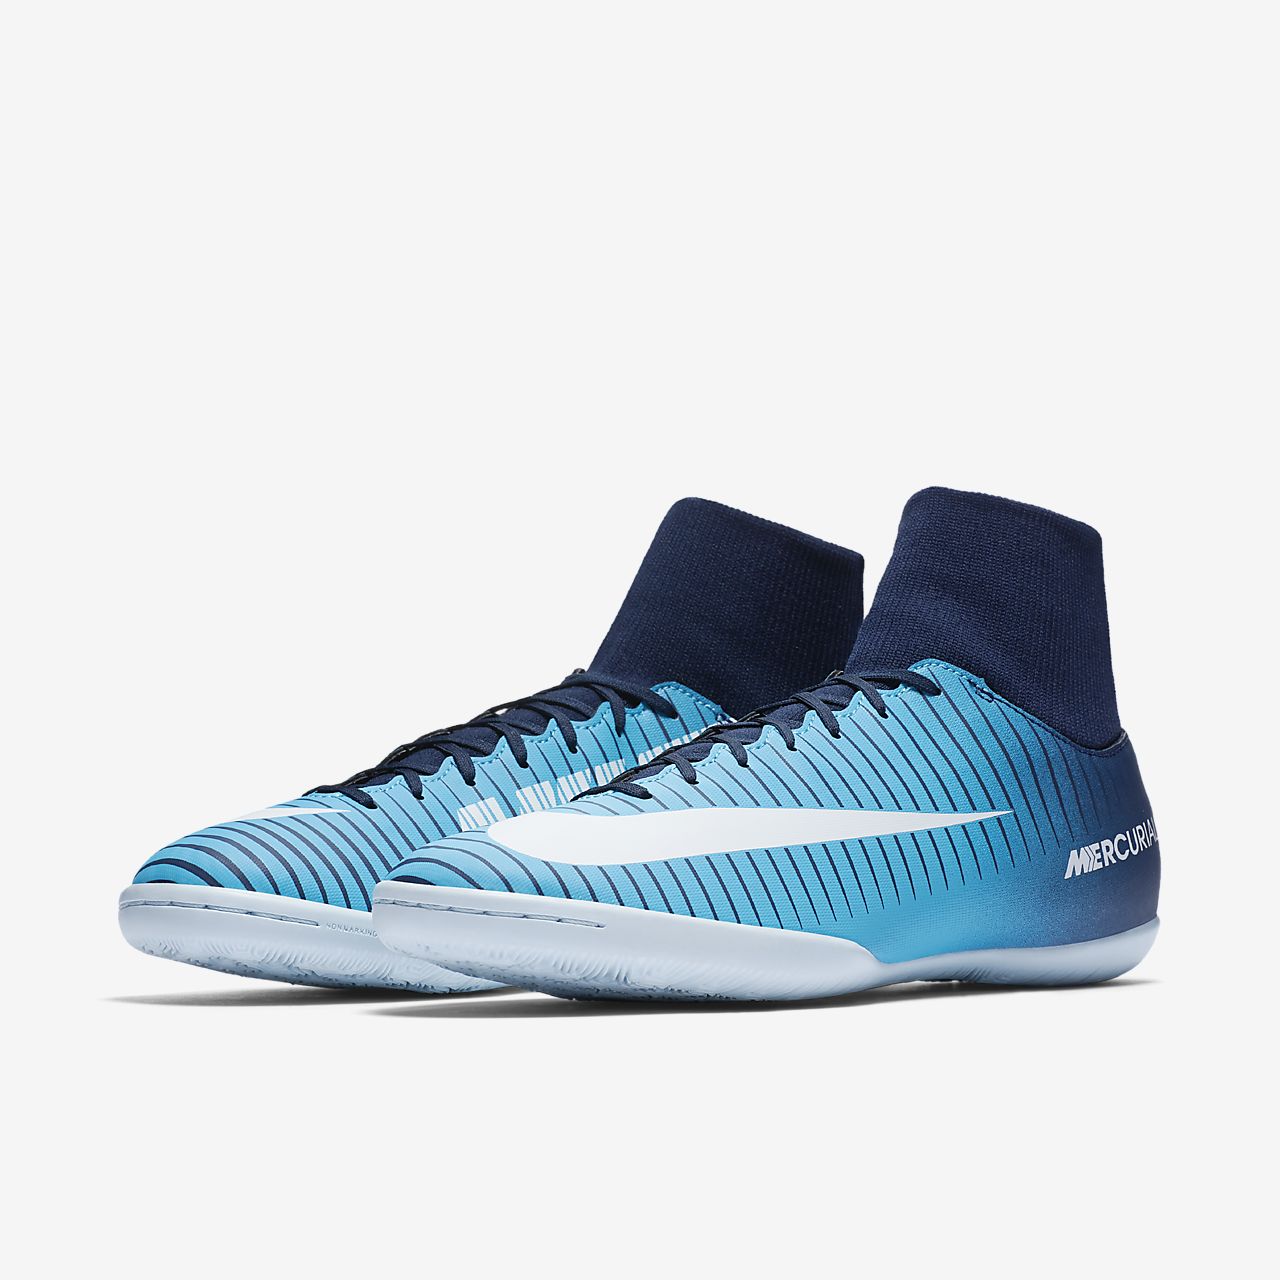 nike indoor soccer shoes blue off 67% -